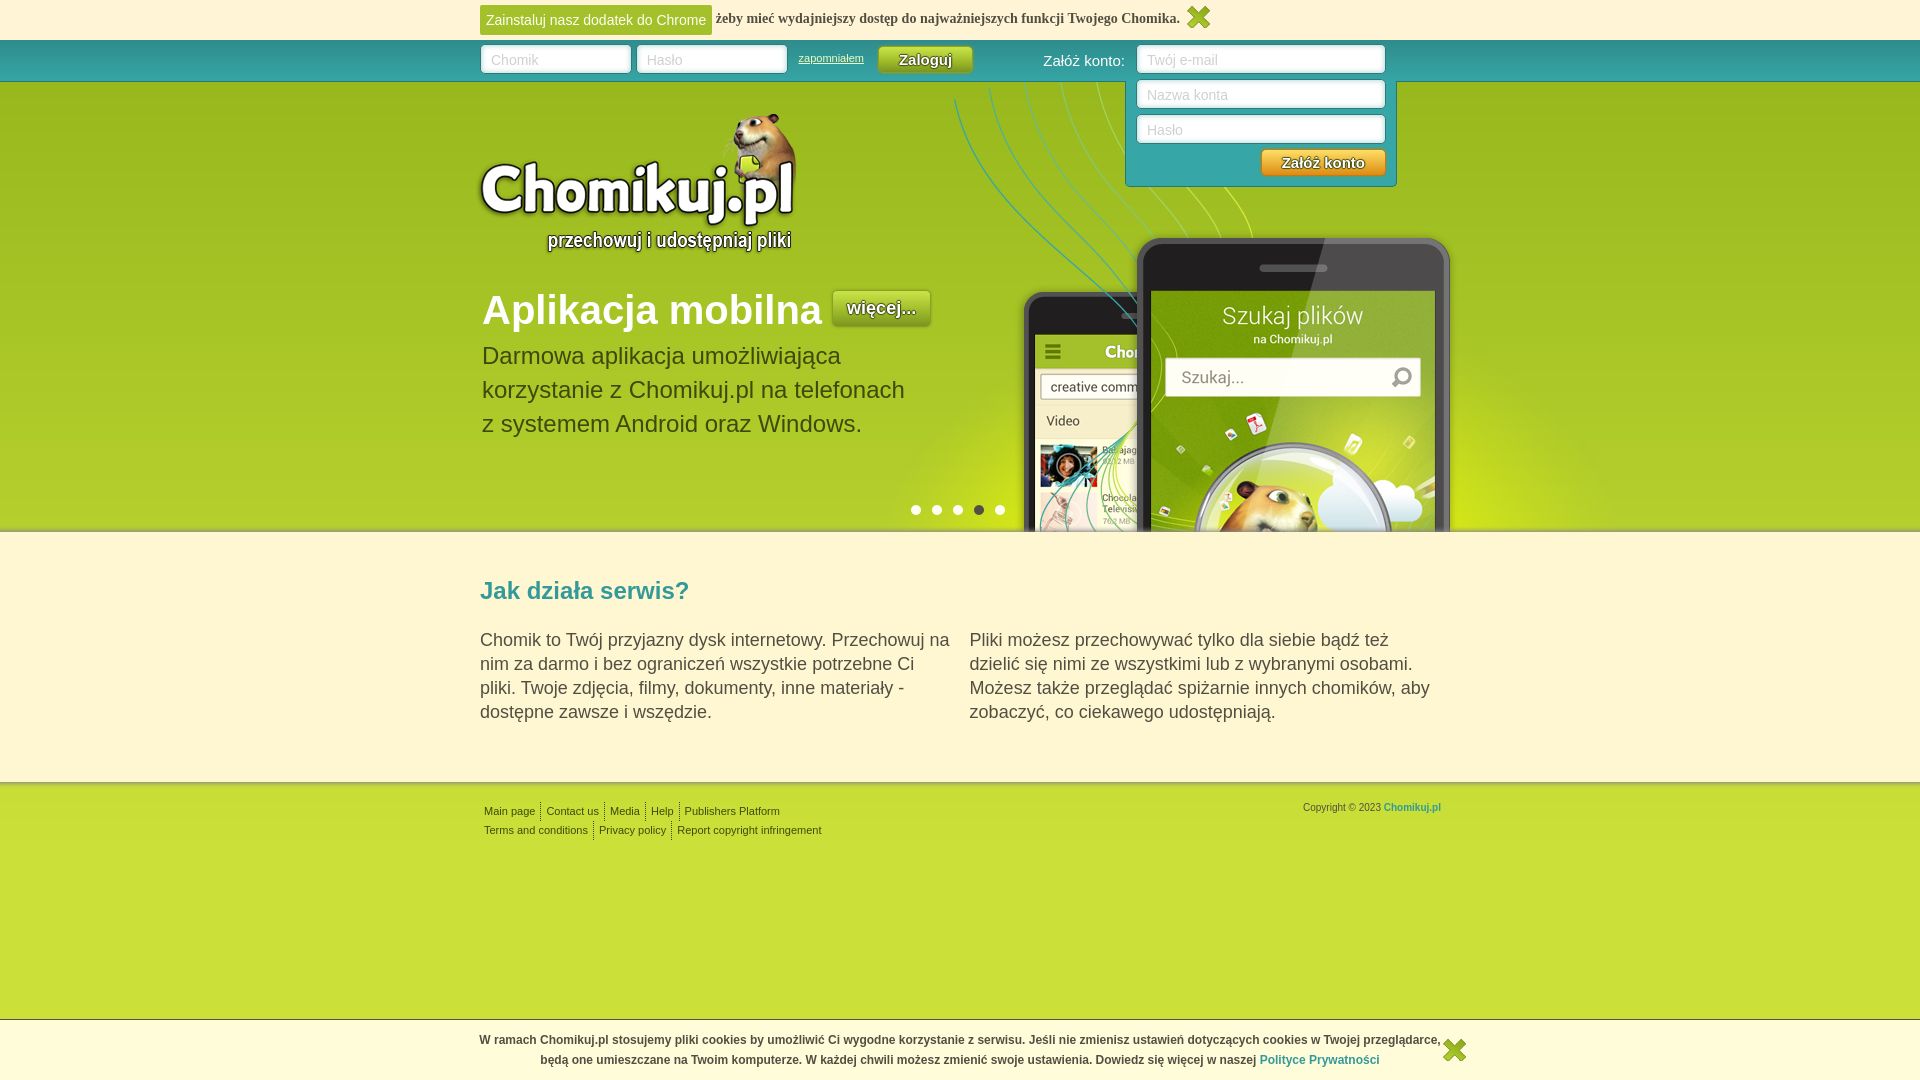 Website status chomikuj.pl is   ONLINE